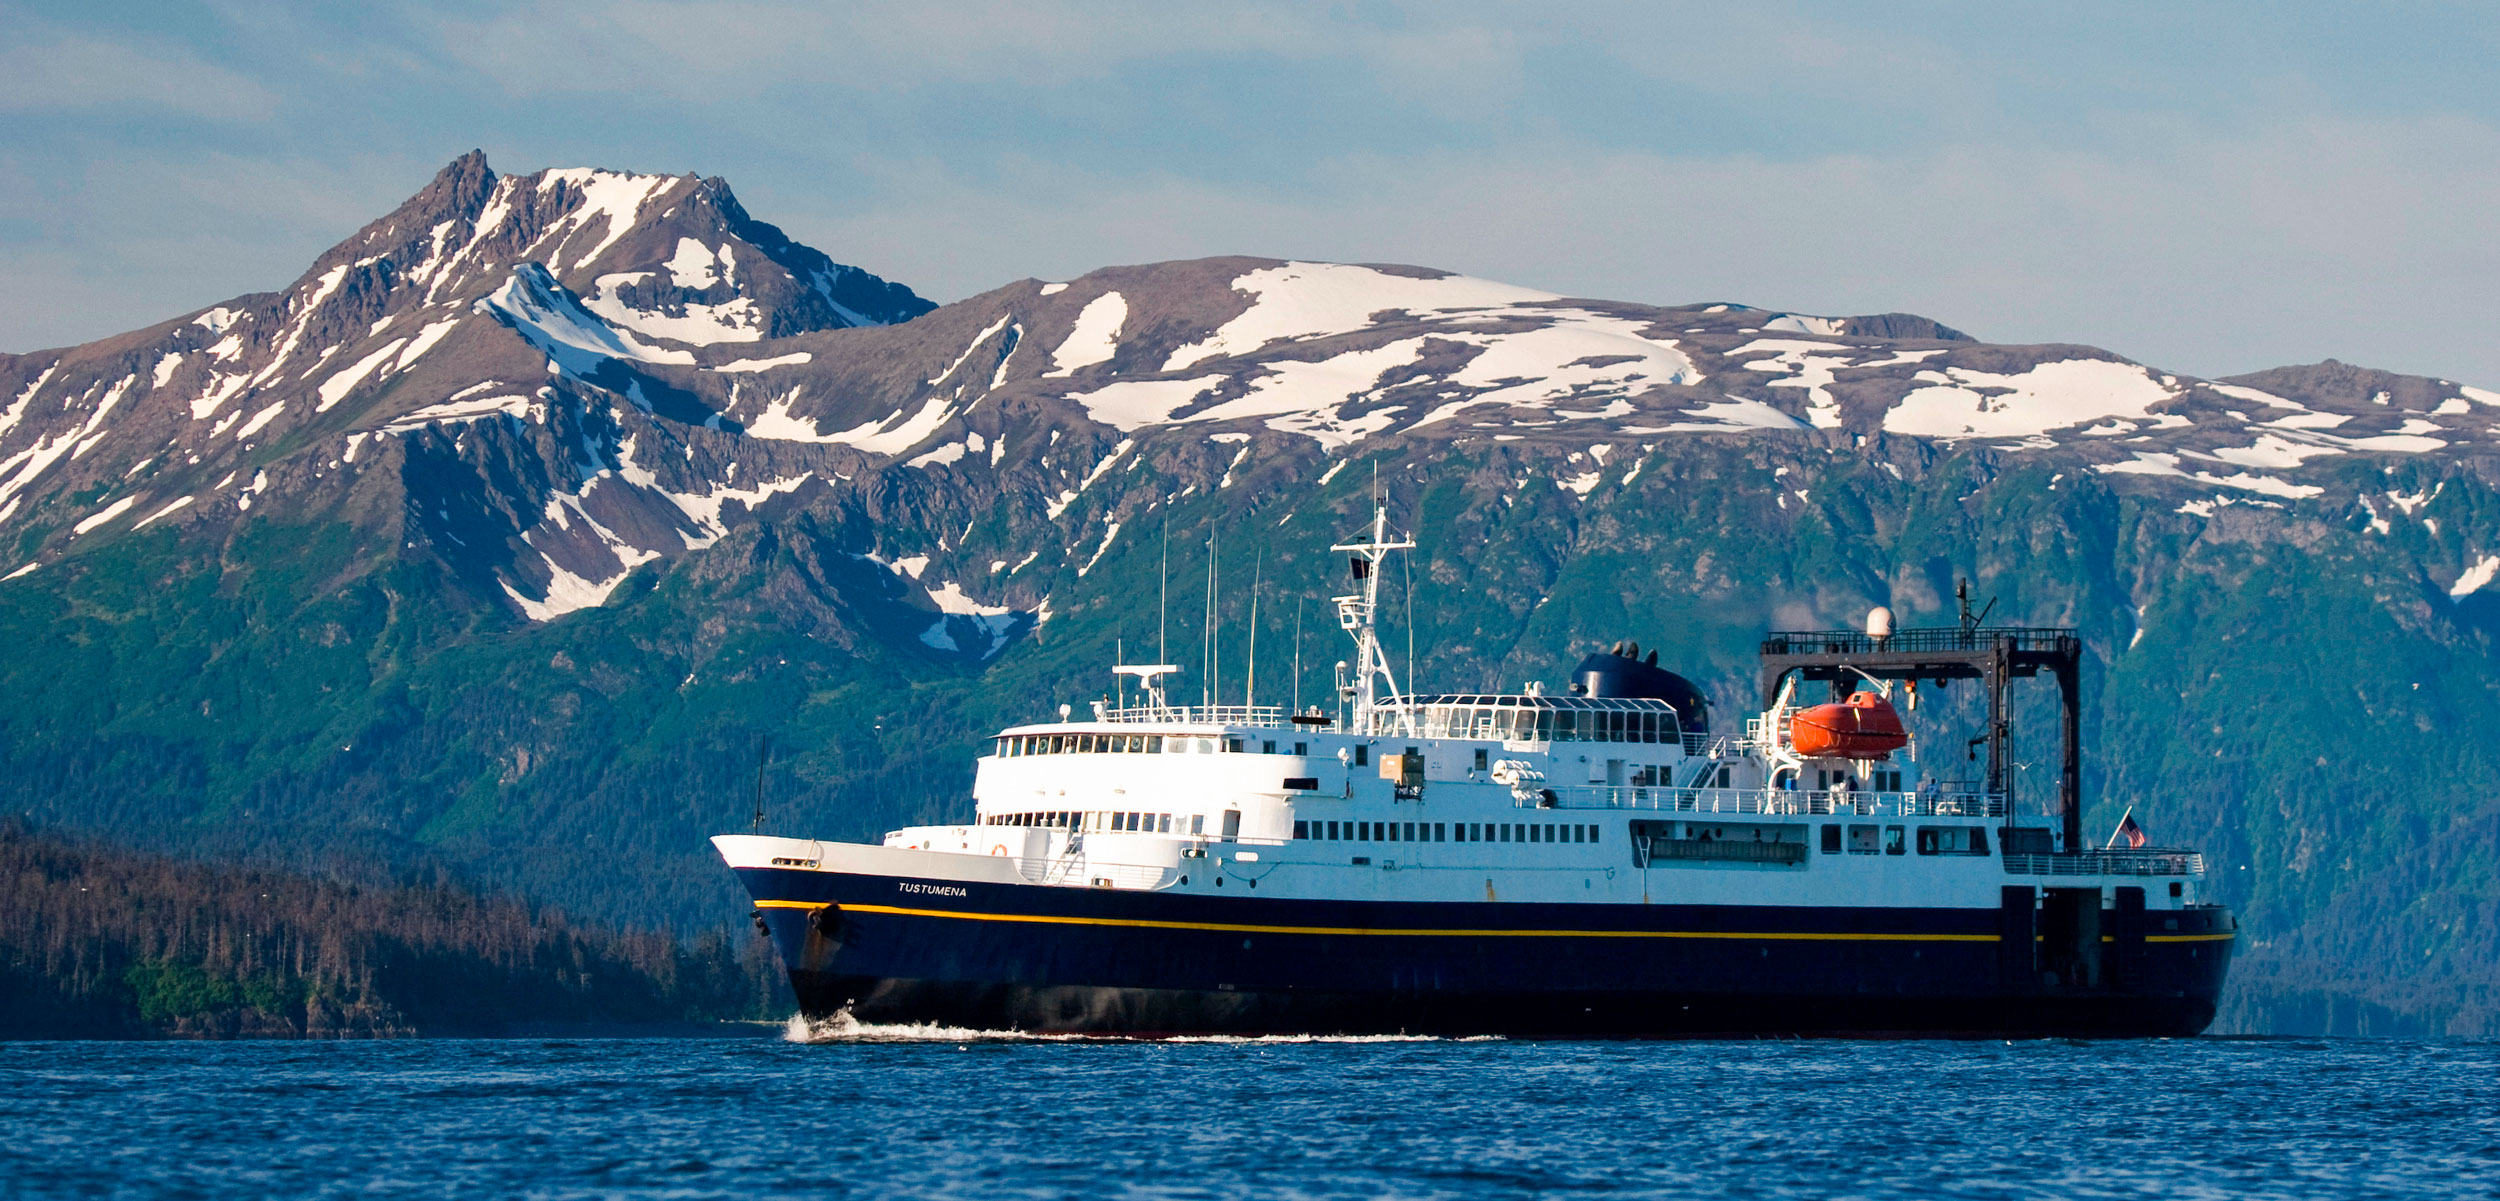 Alaska State Ferry leaving Homer in Kachemak Bay in Southcentral, Alaska